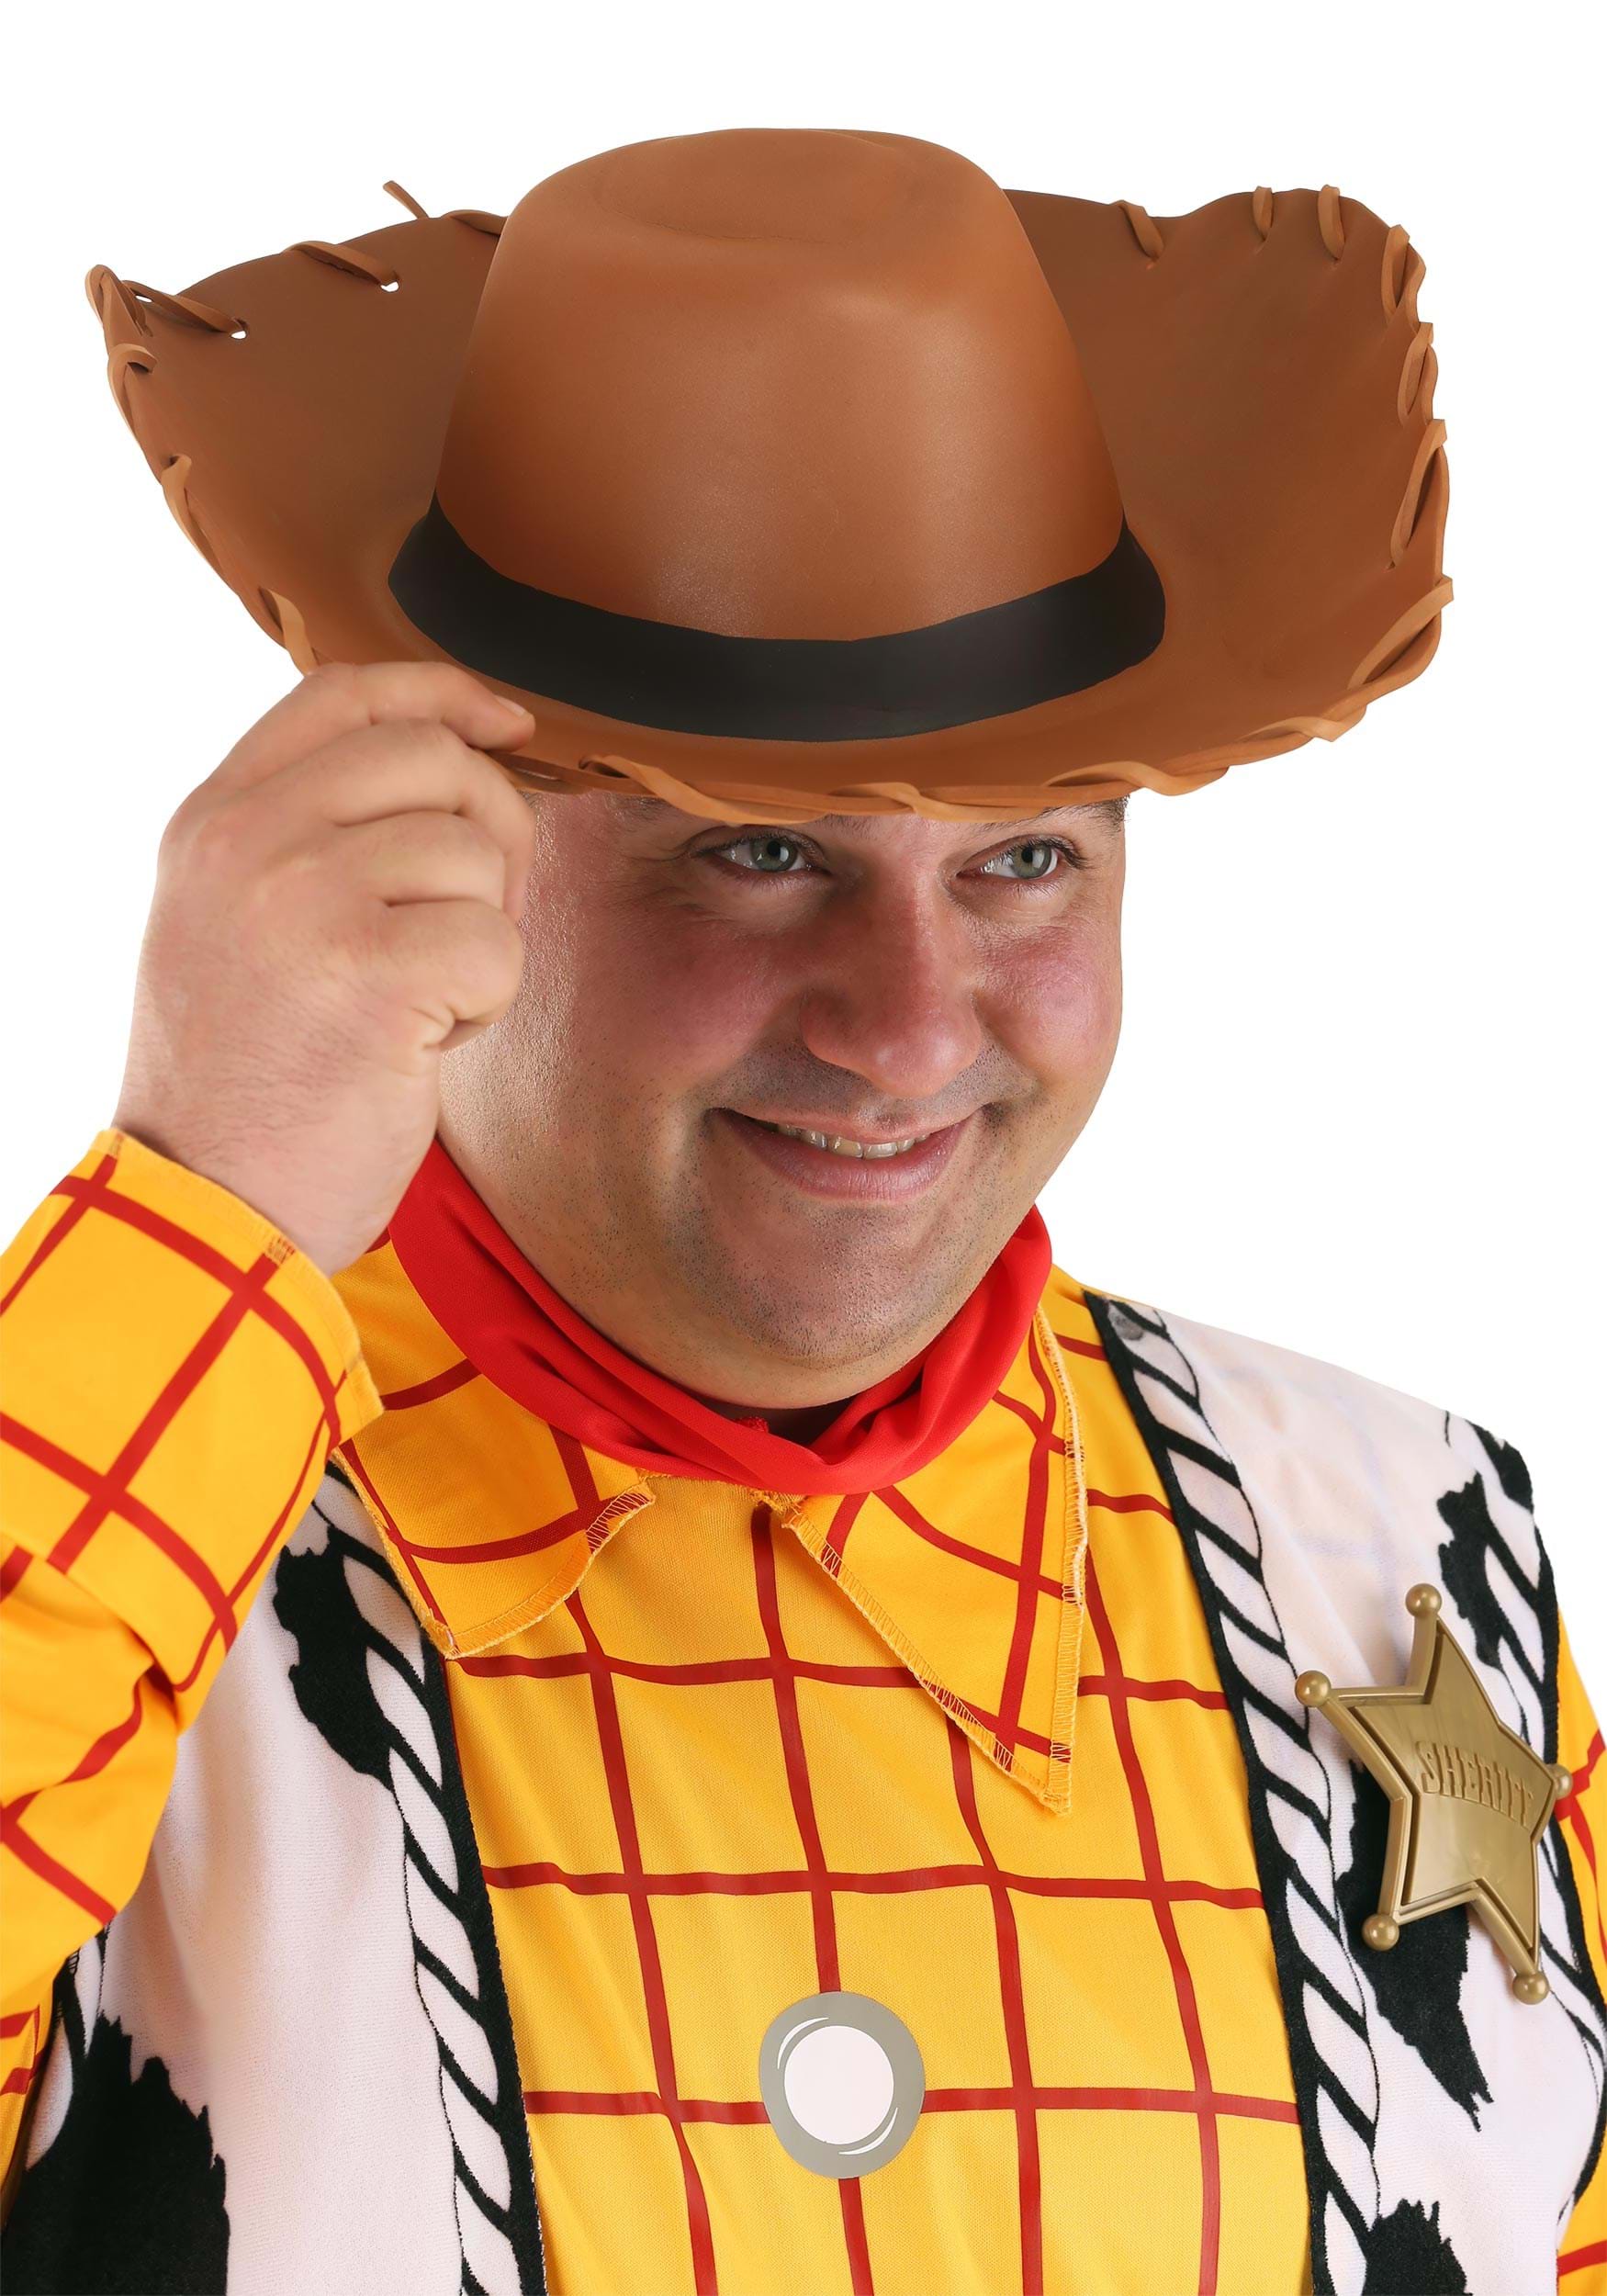 Men's Woody Toy Story Costume